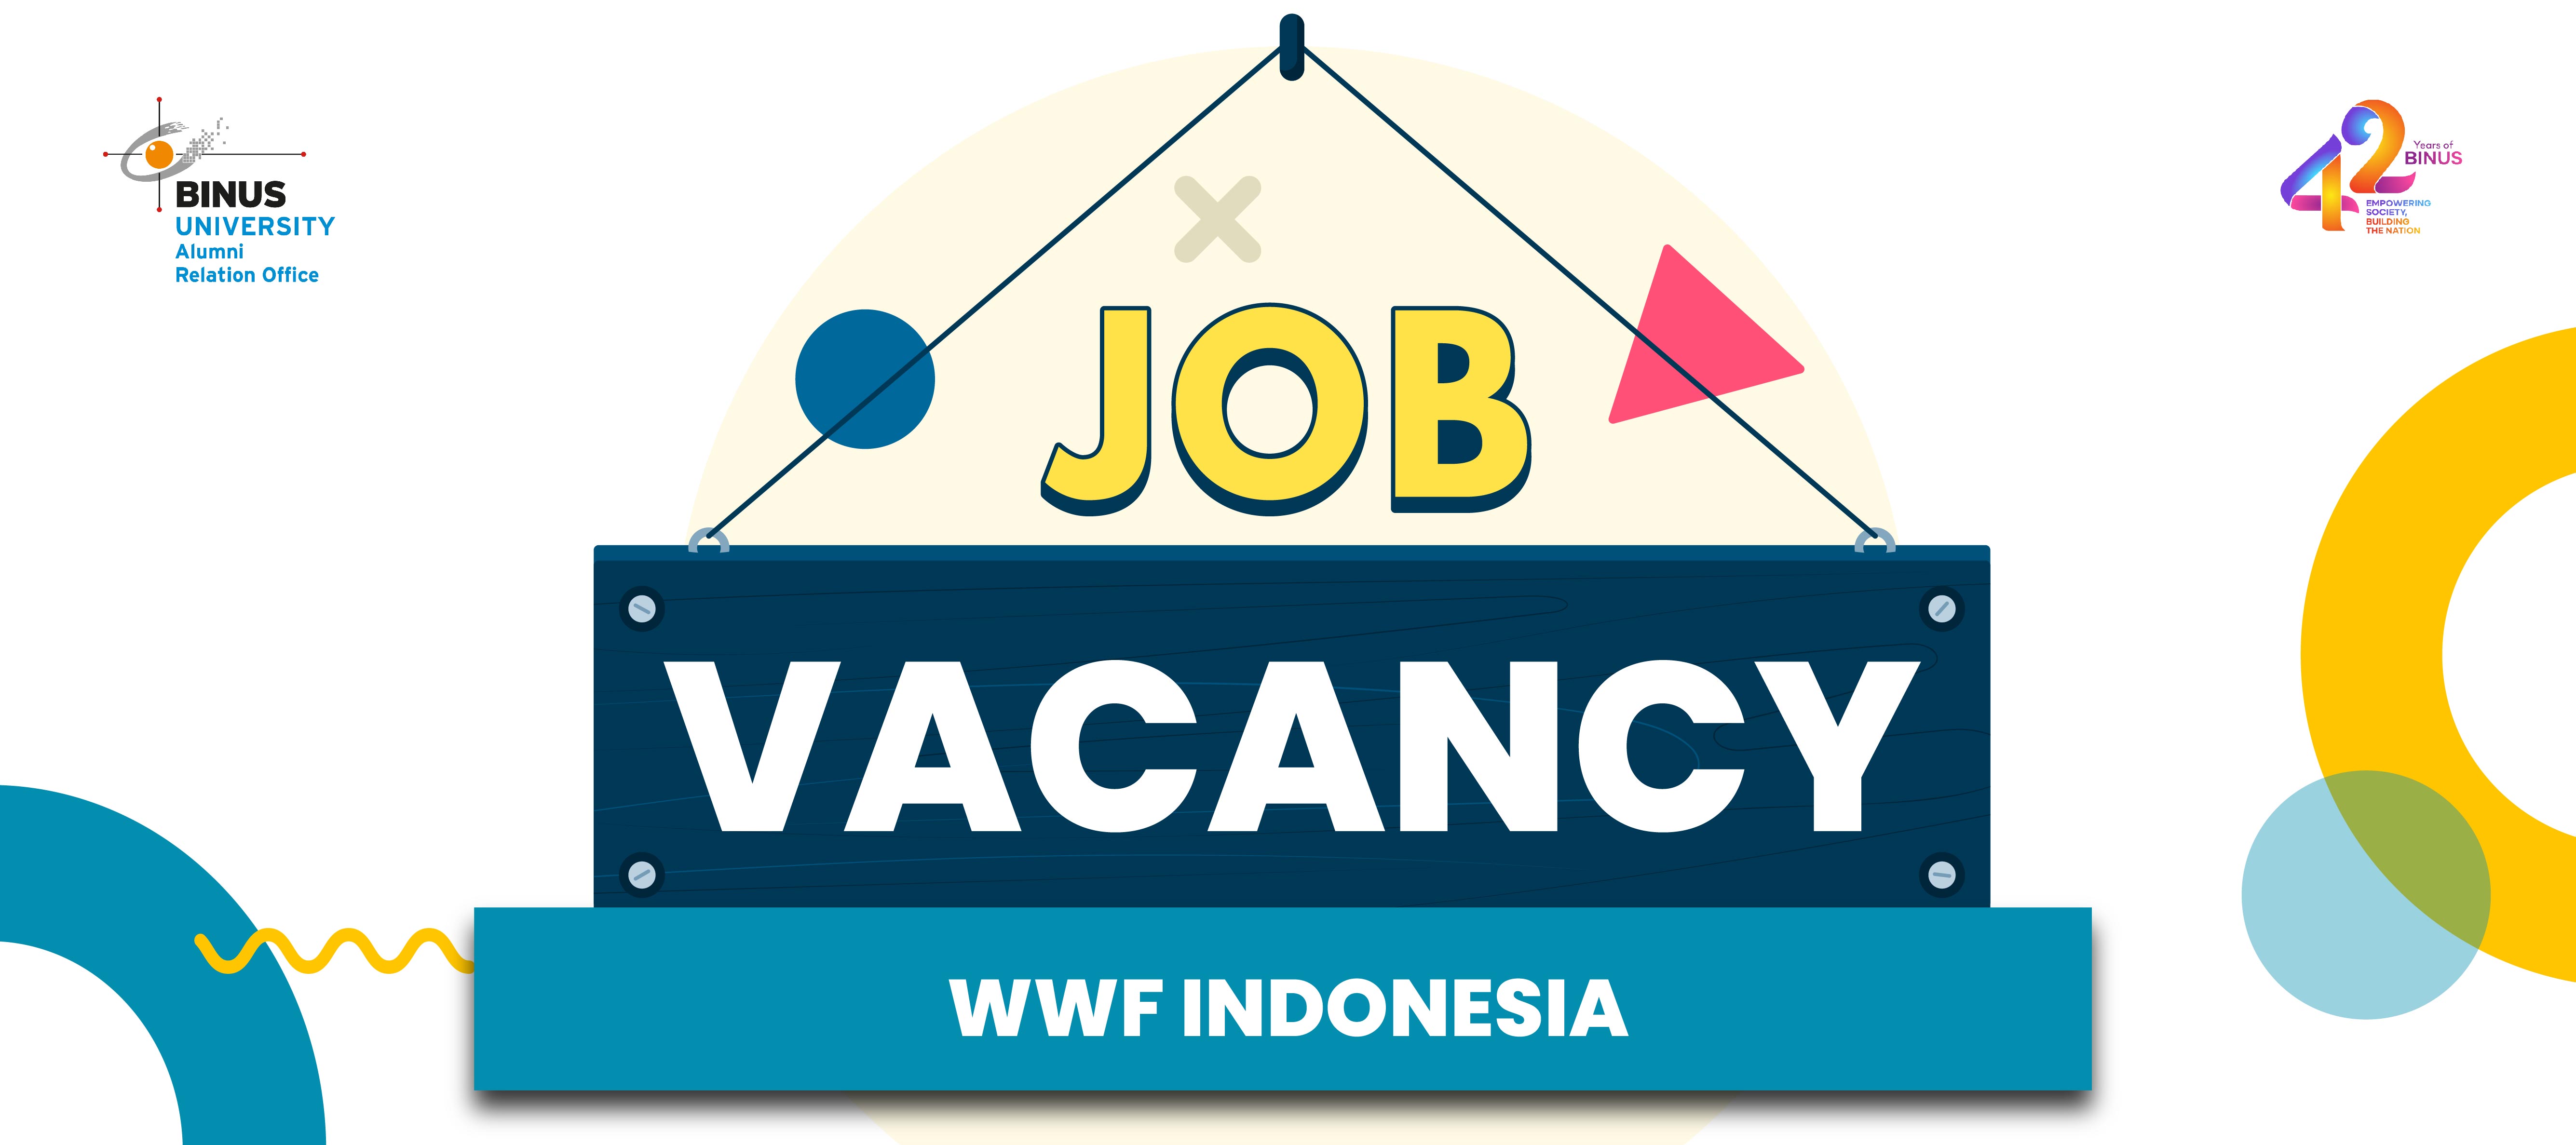 [JOB VACANCY] - WWF Indonesia